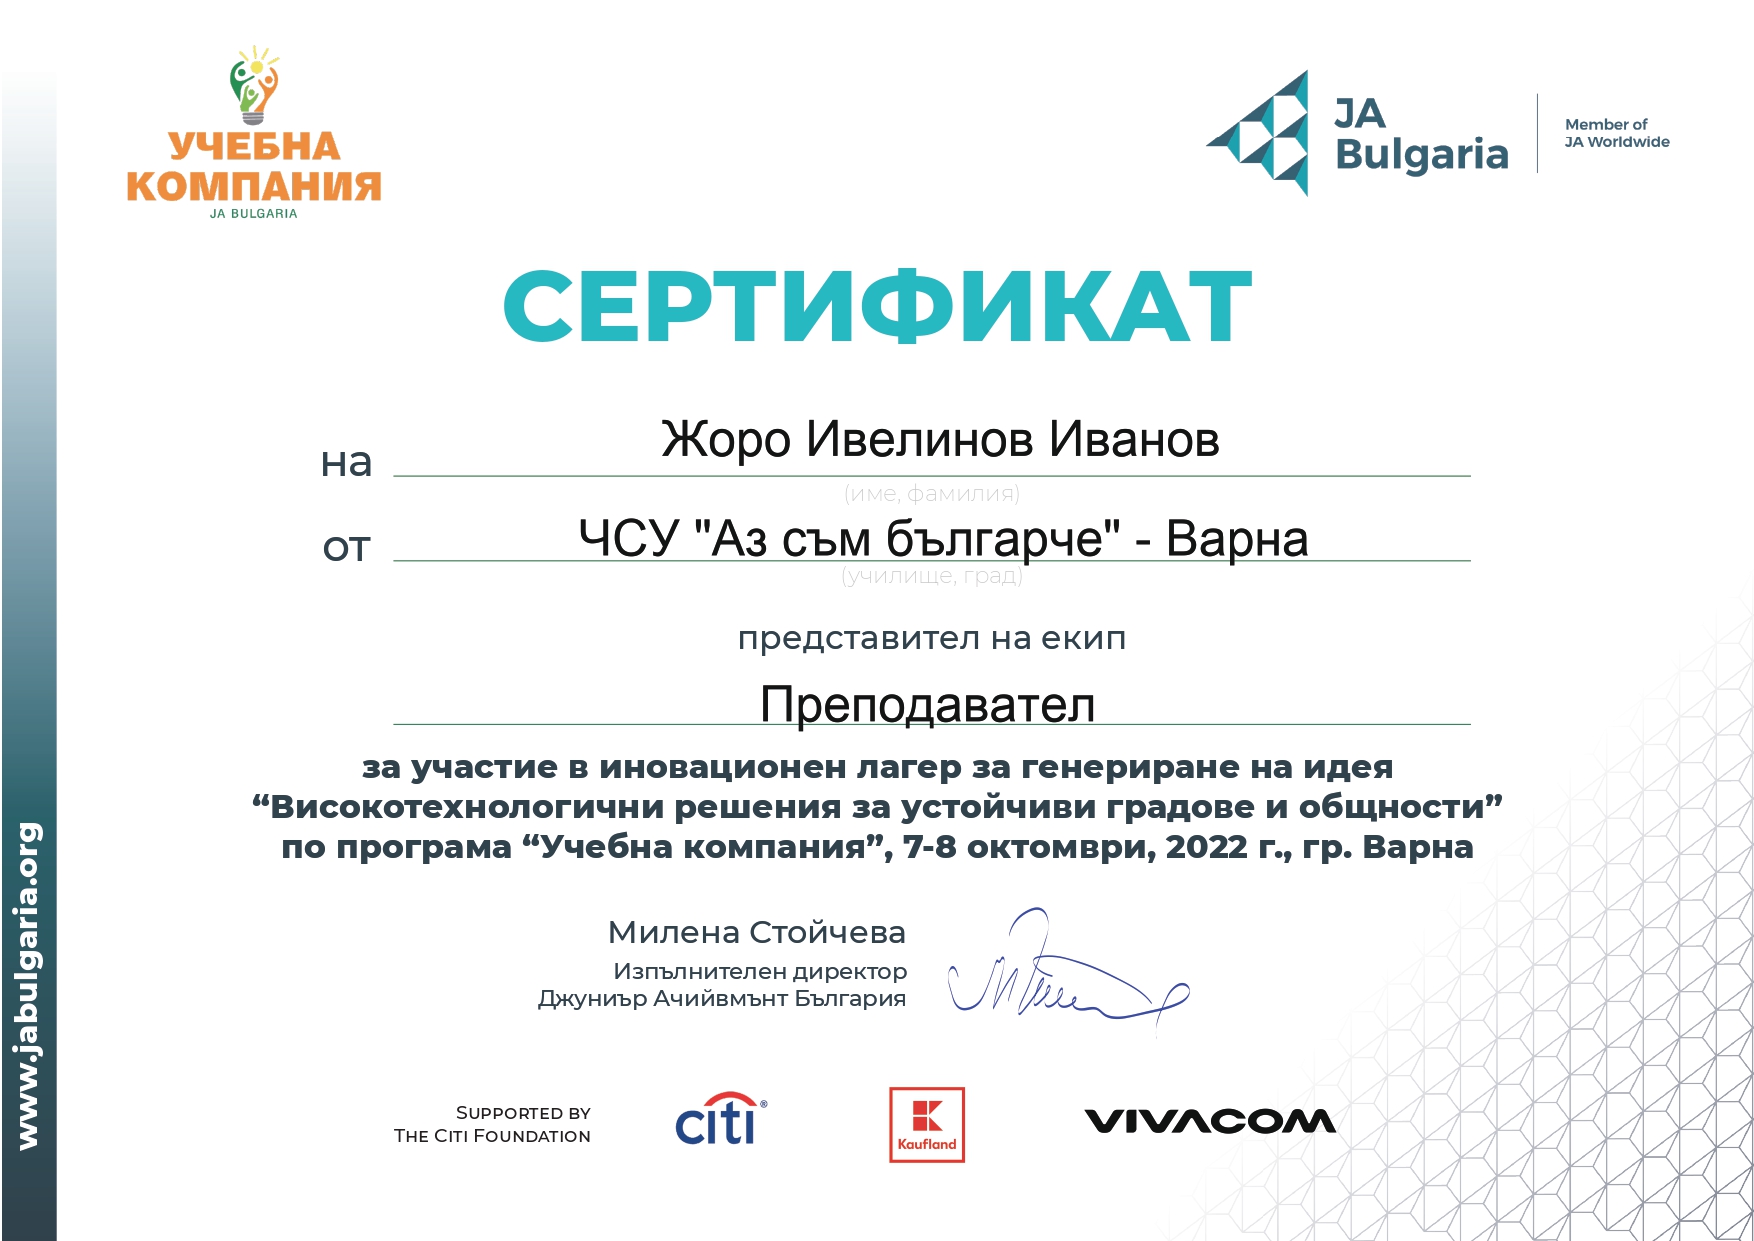 117-9-ja-certificate---за-участие-варна-2022page-0001.jpg